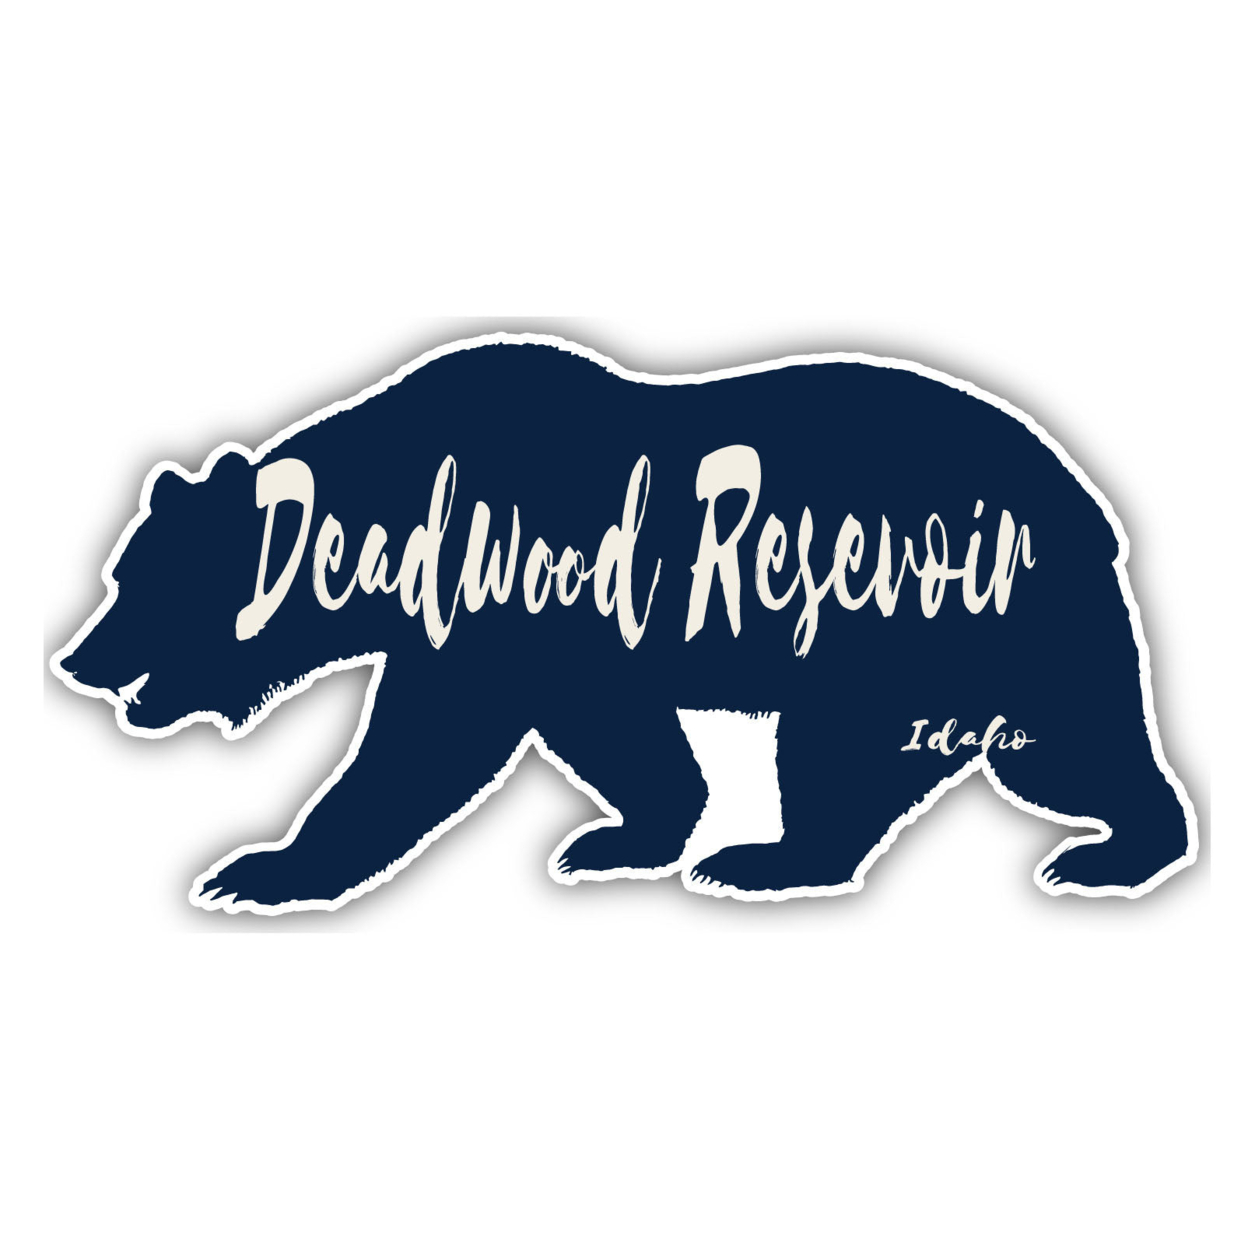 Deadwood Resevoir Idaho Souvenir Decorative Stickers (Choose Theme And Size) - Single Unit, 2-Inch, Bear